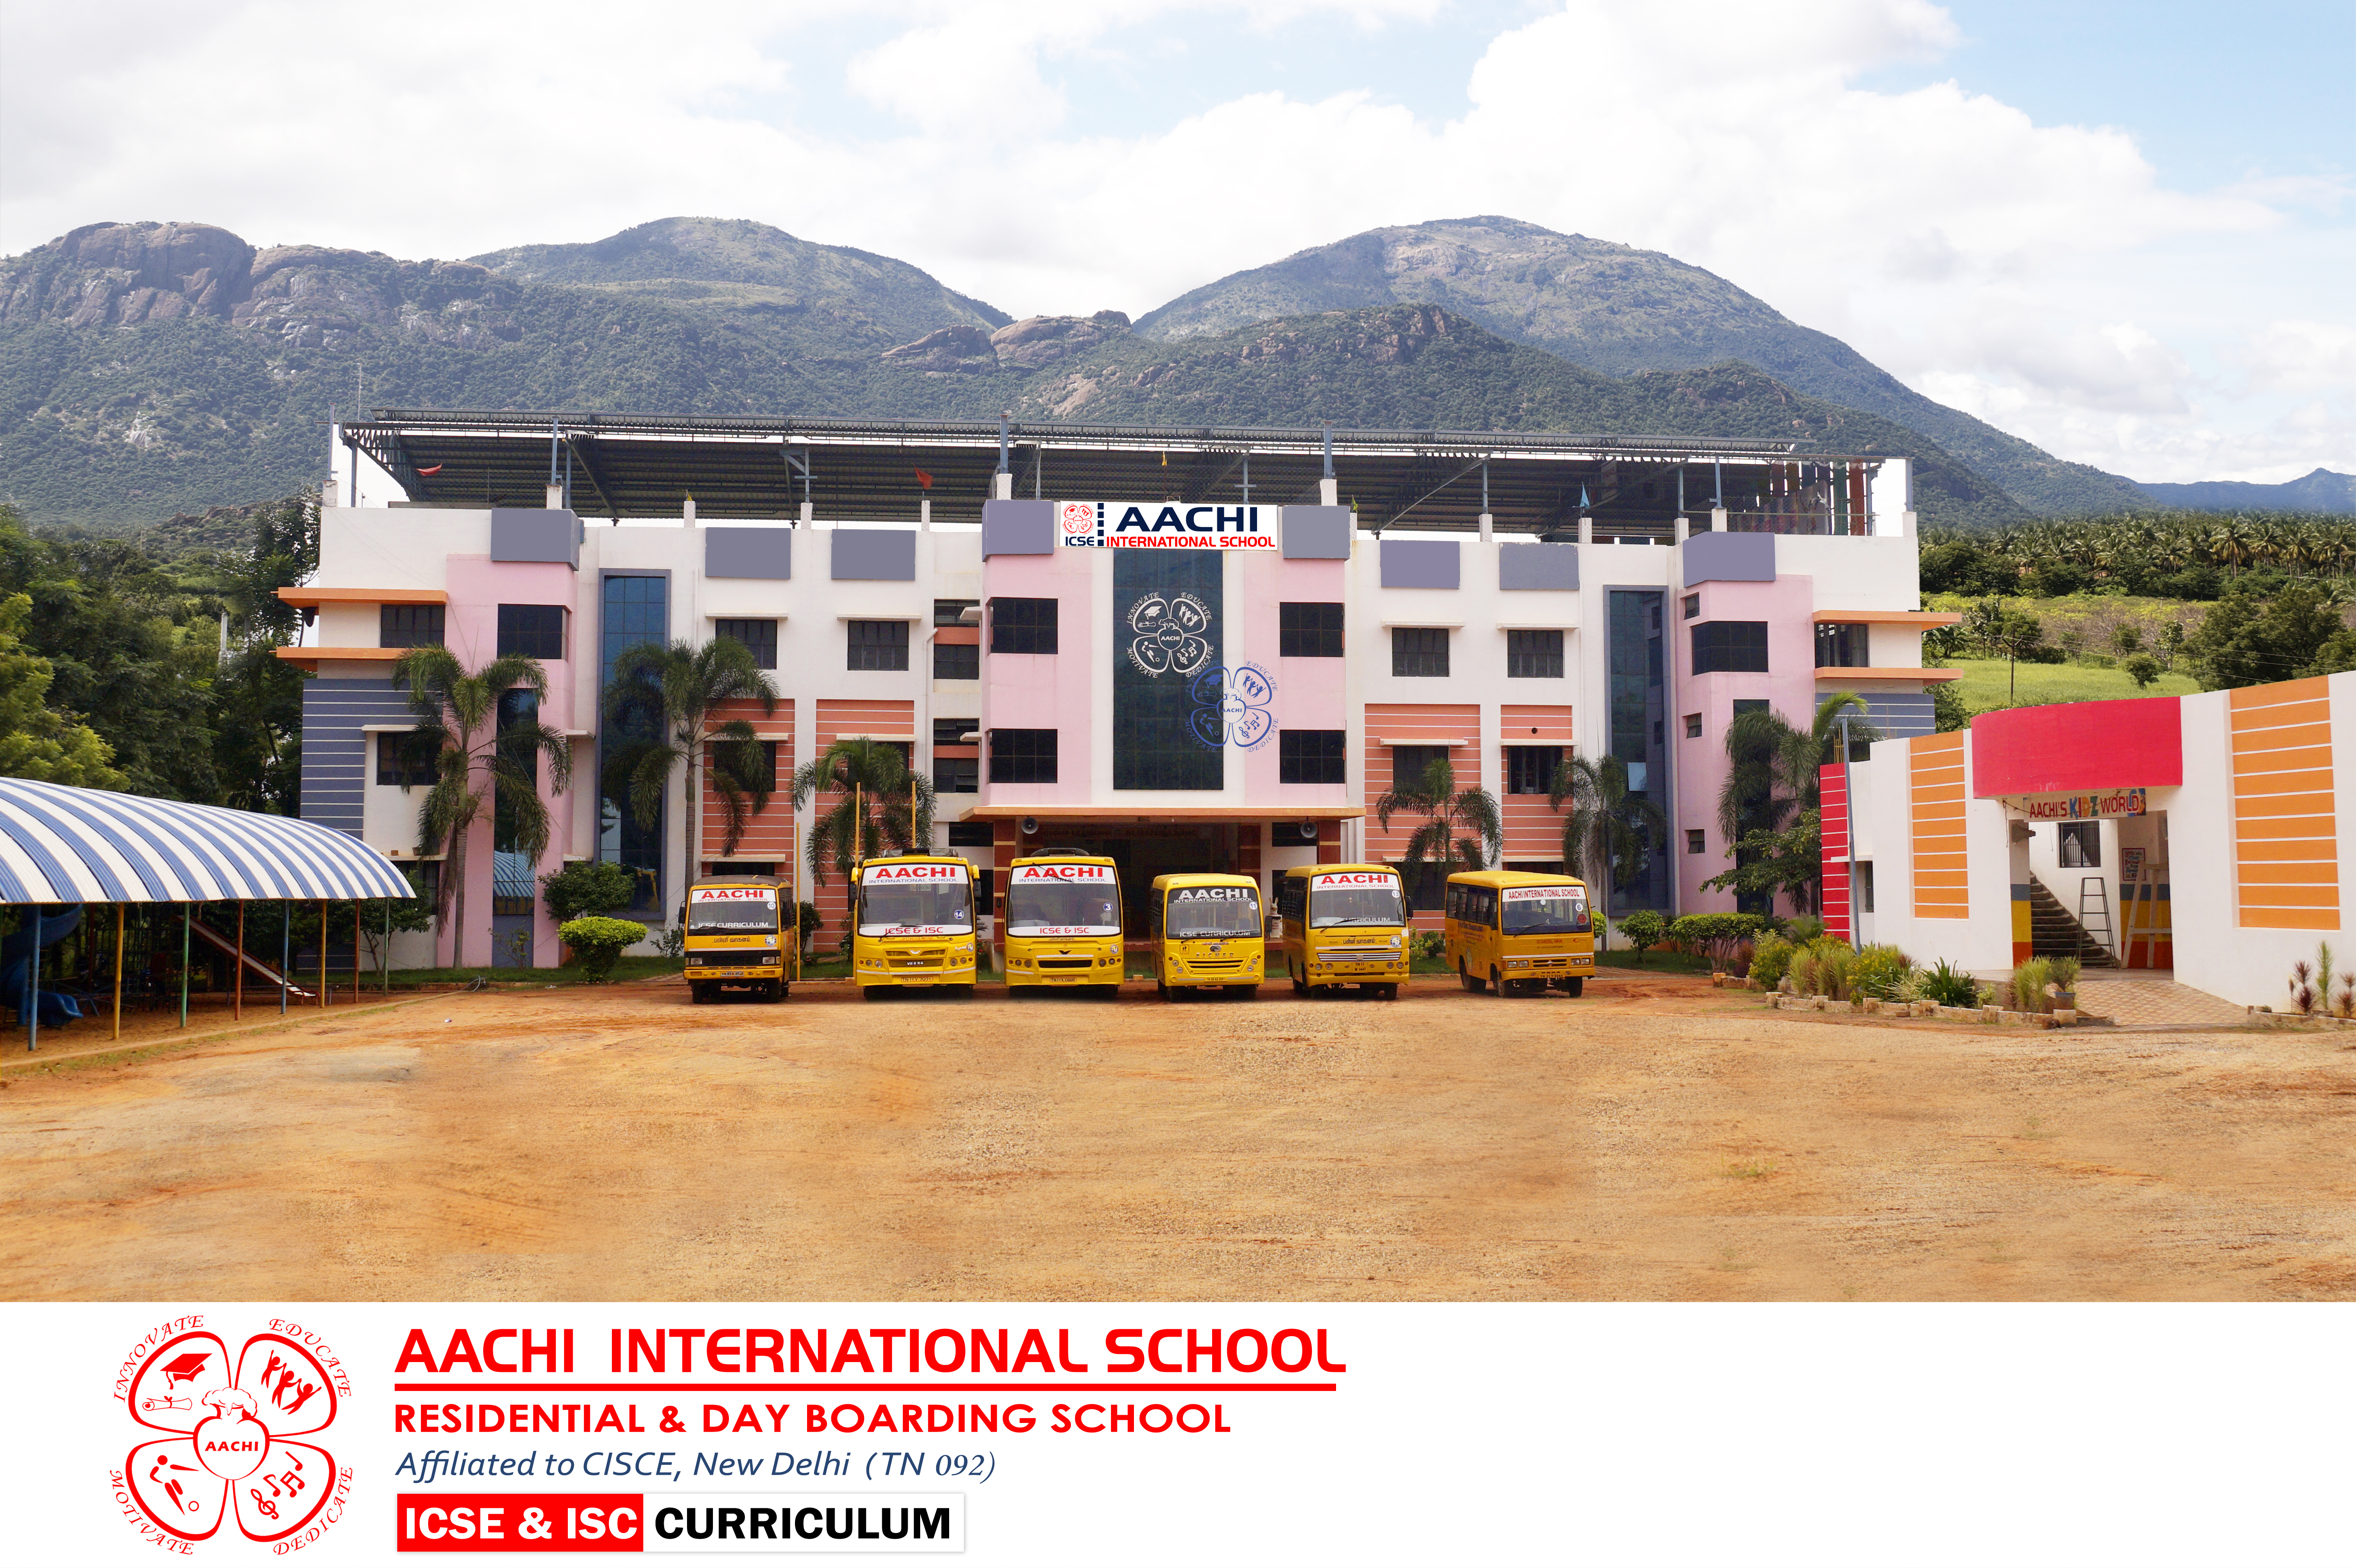 Aachi International School has bagged Asia's Best International School of the Year